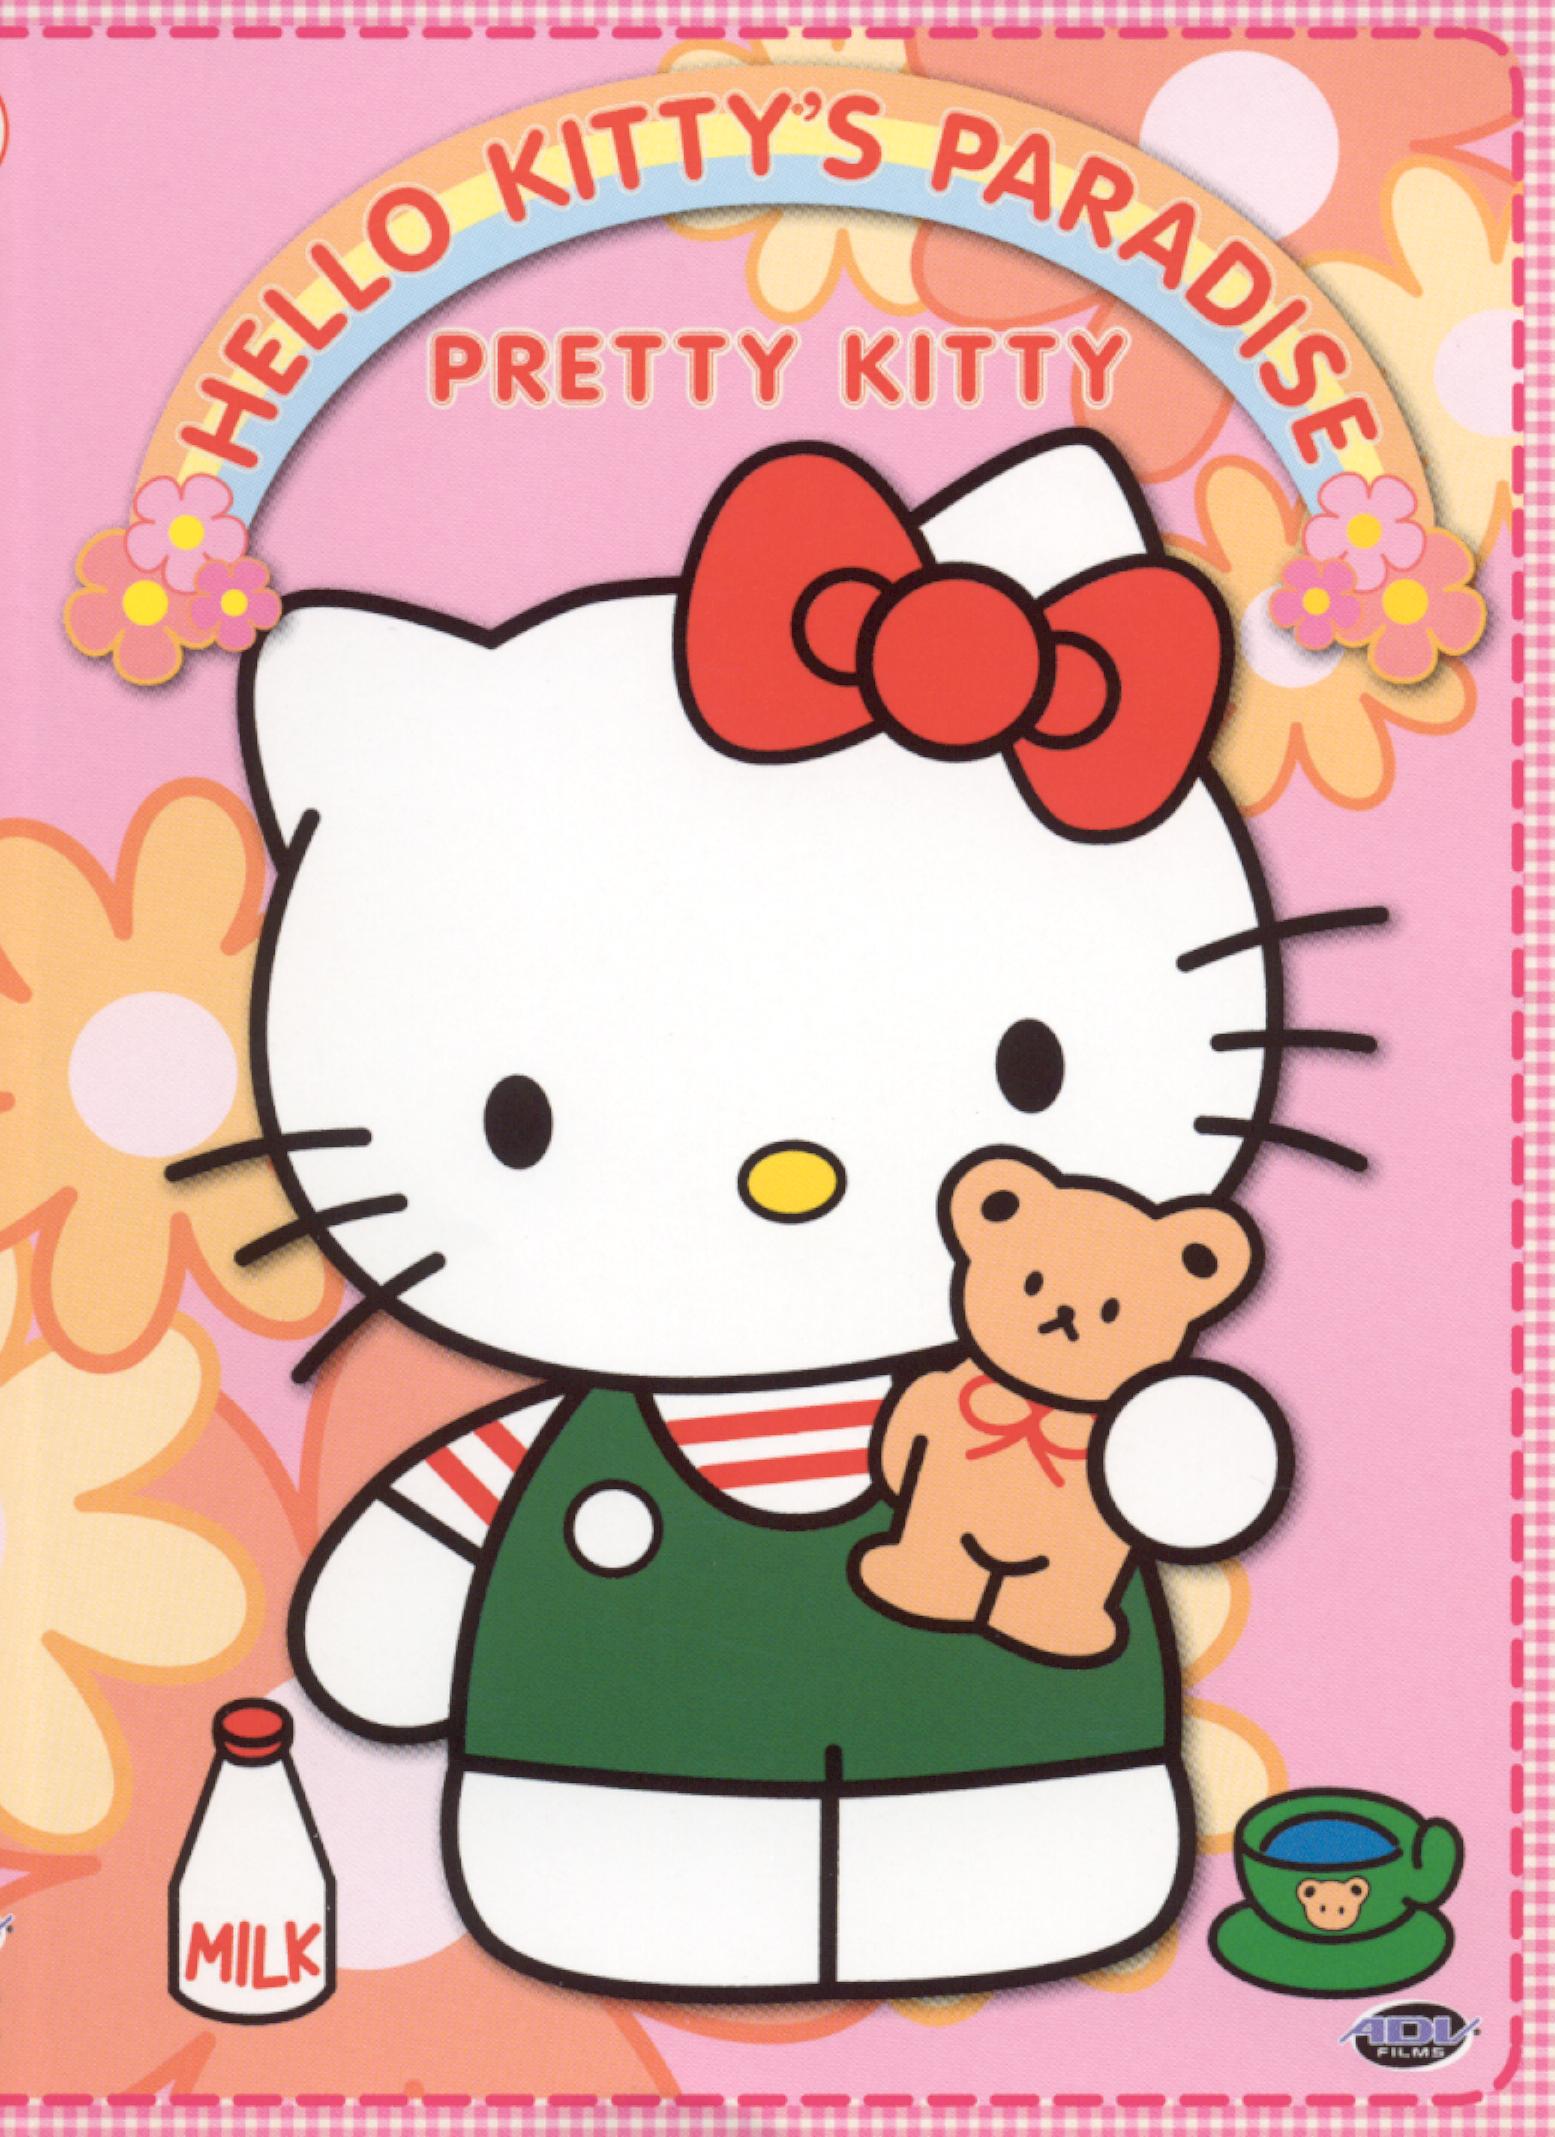 Best Buy: Hello Kitty's Paradise, Vol. 1: Pretty Kitty [DVD]